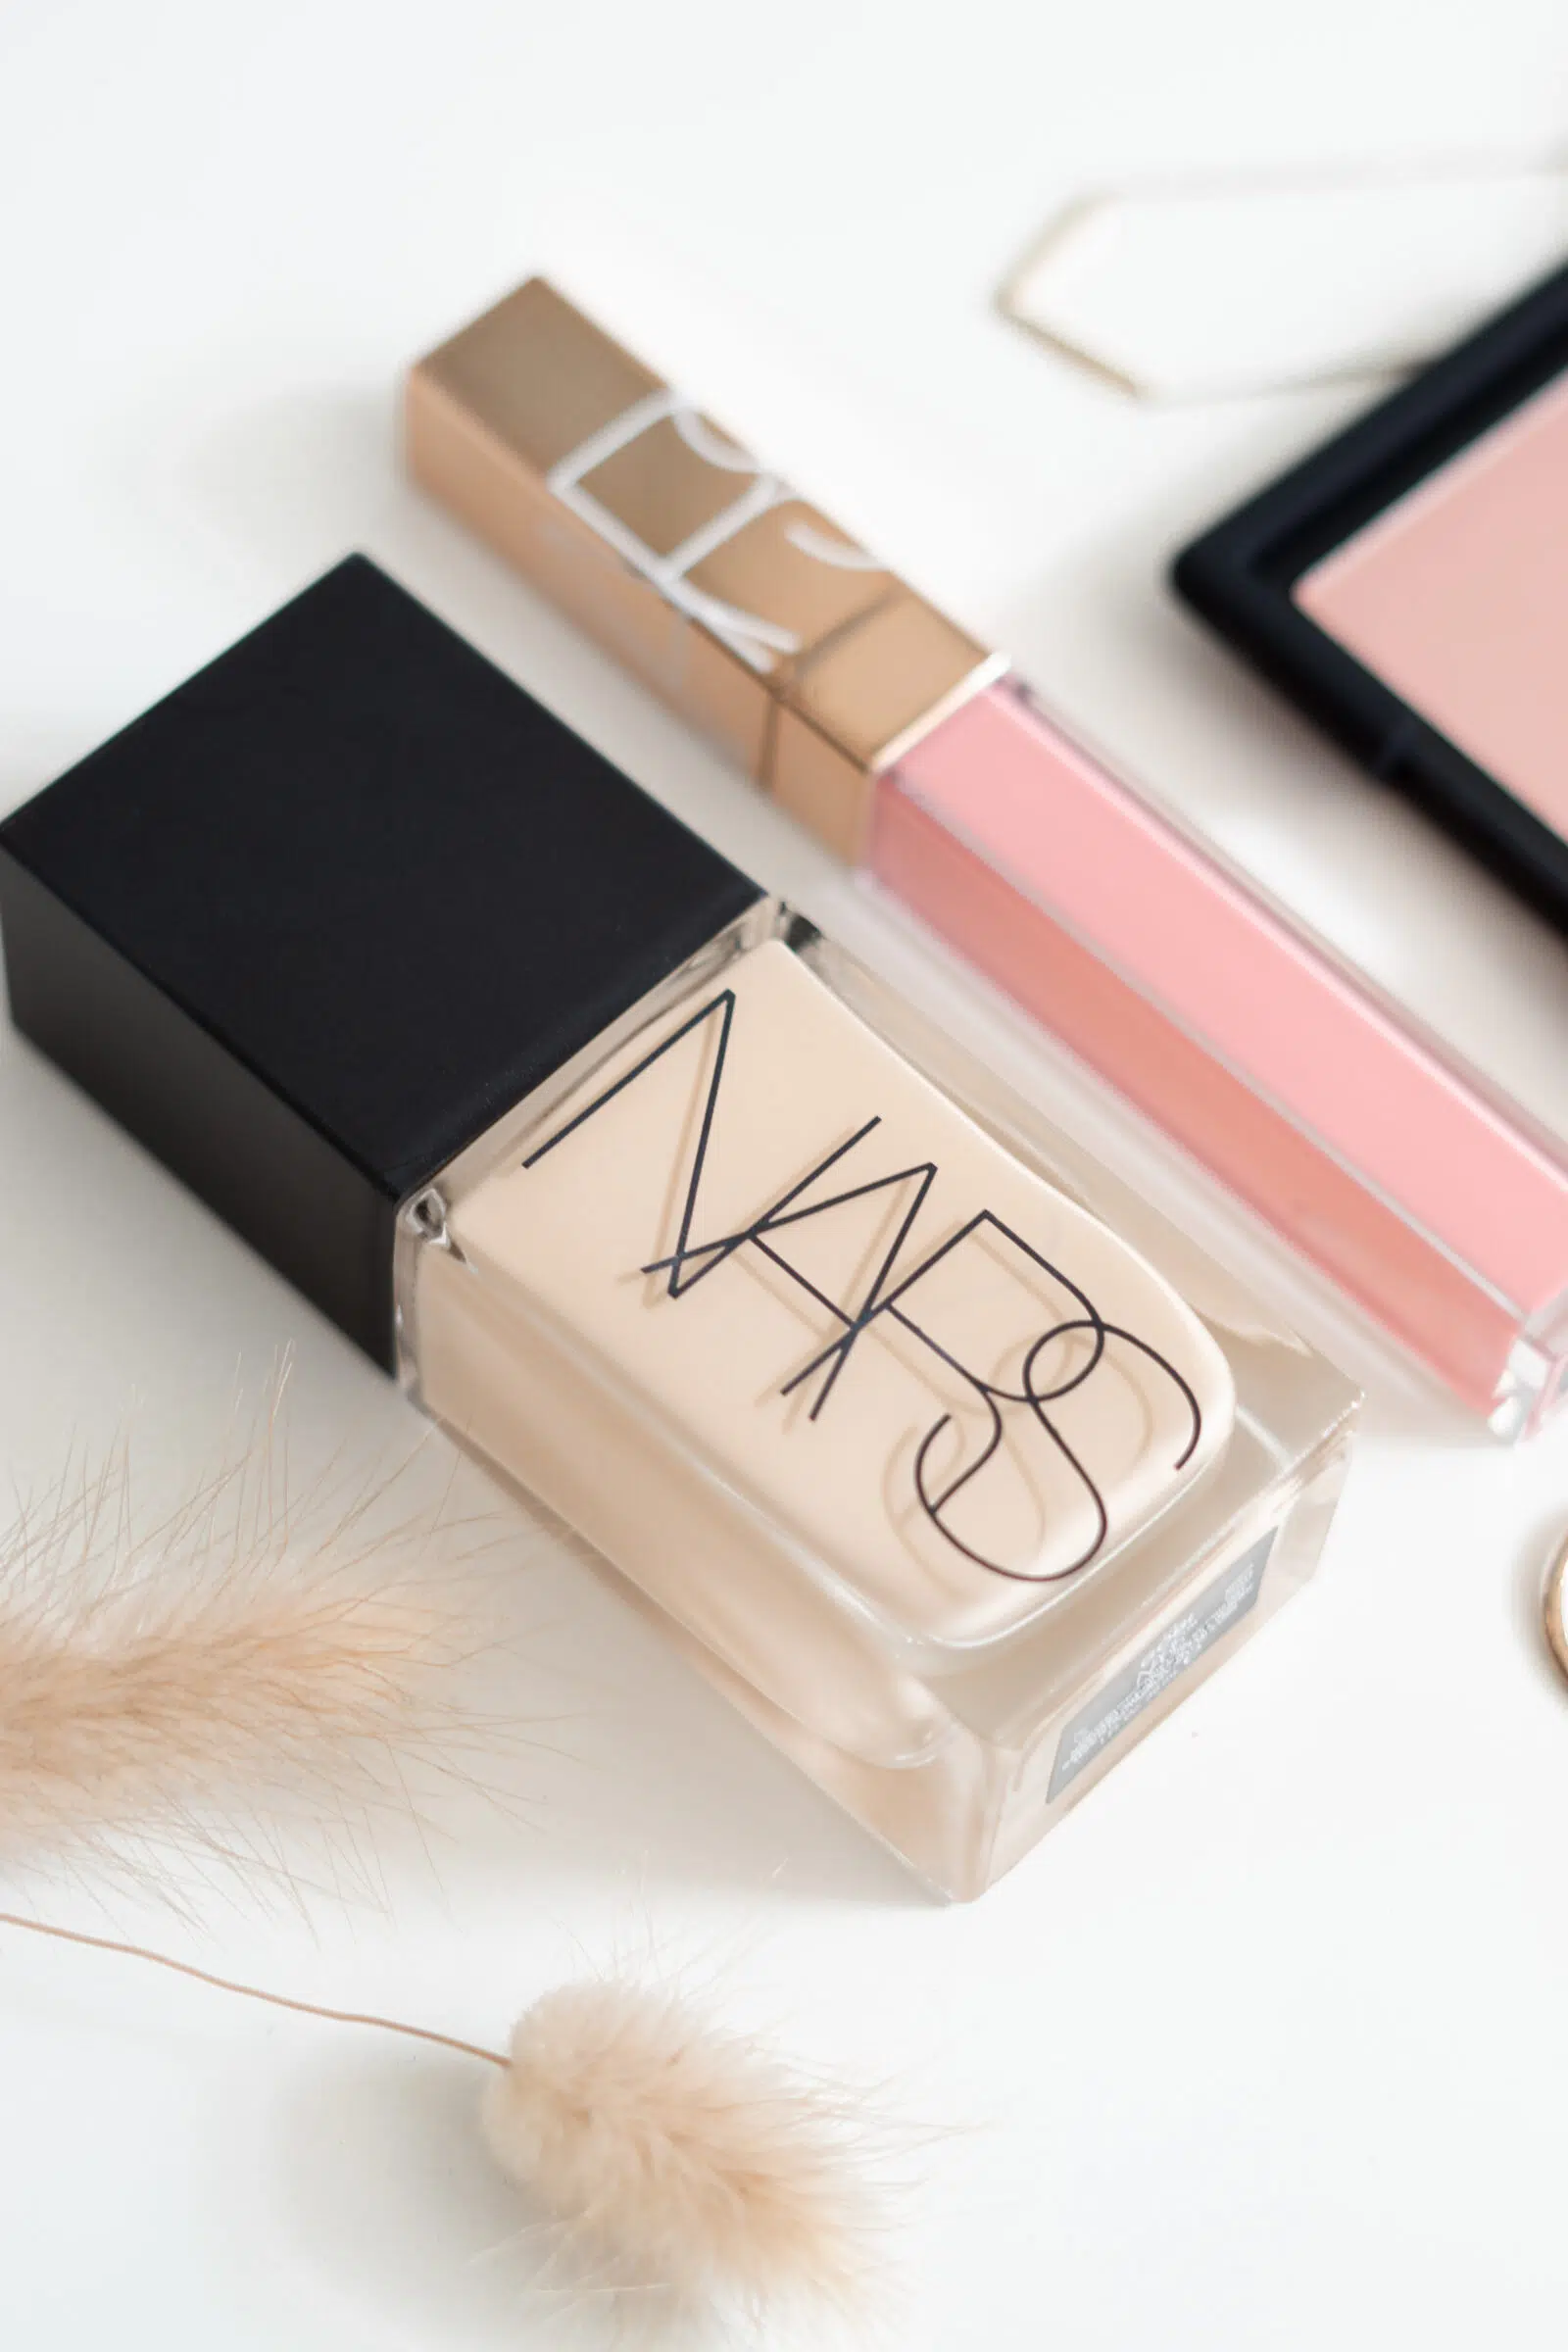 NARS Light Reflecting Foundation ⋆ Beautymone